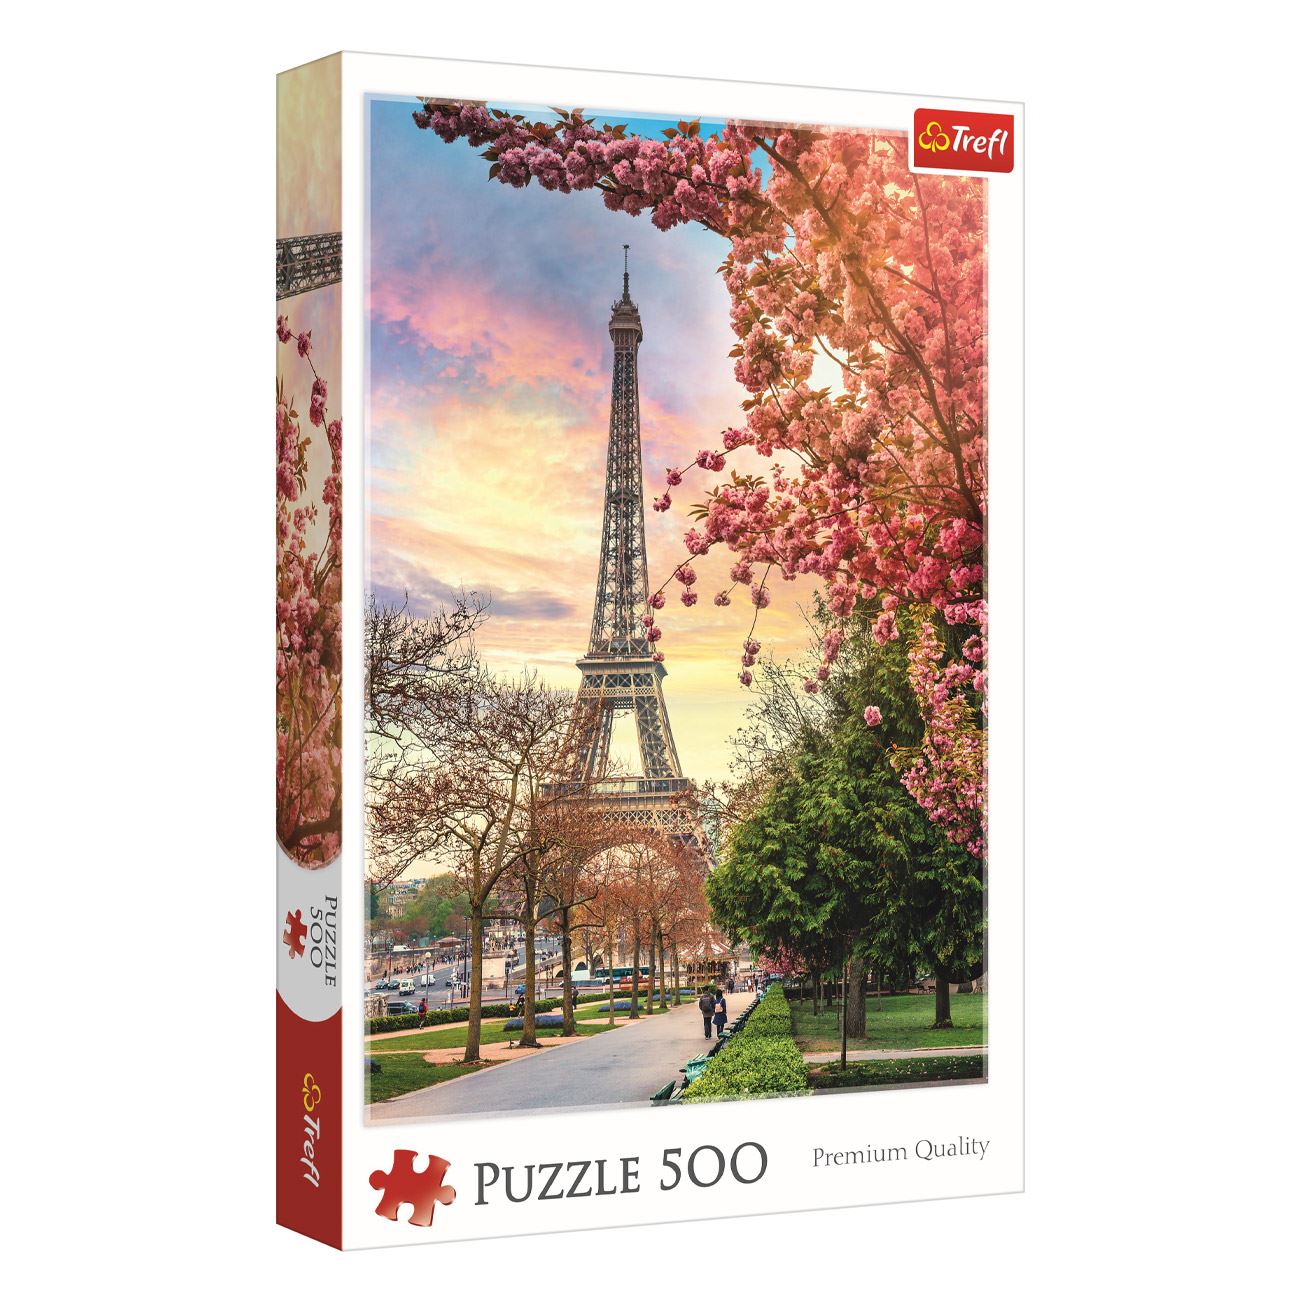 PÁRIZSI puzzle Eiffel-torony virágzó mandulafa (500 darab) - Trefl